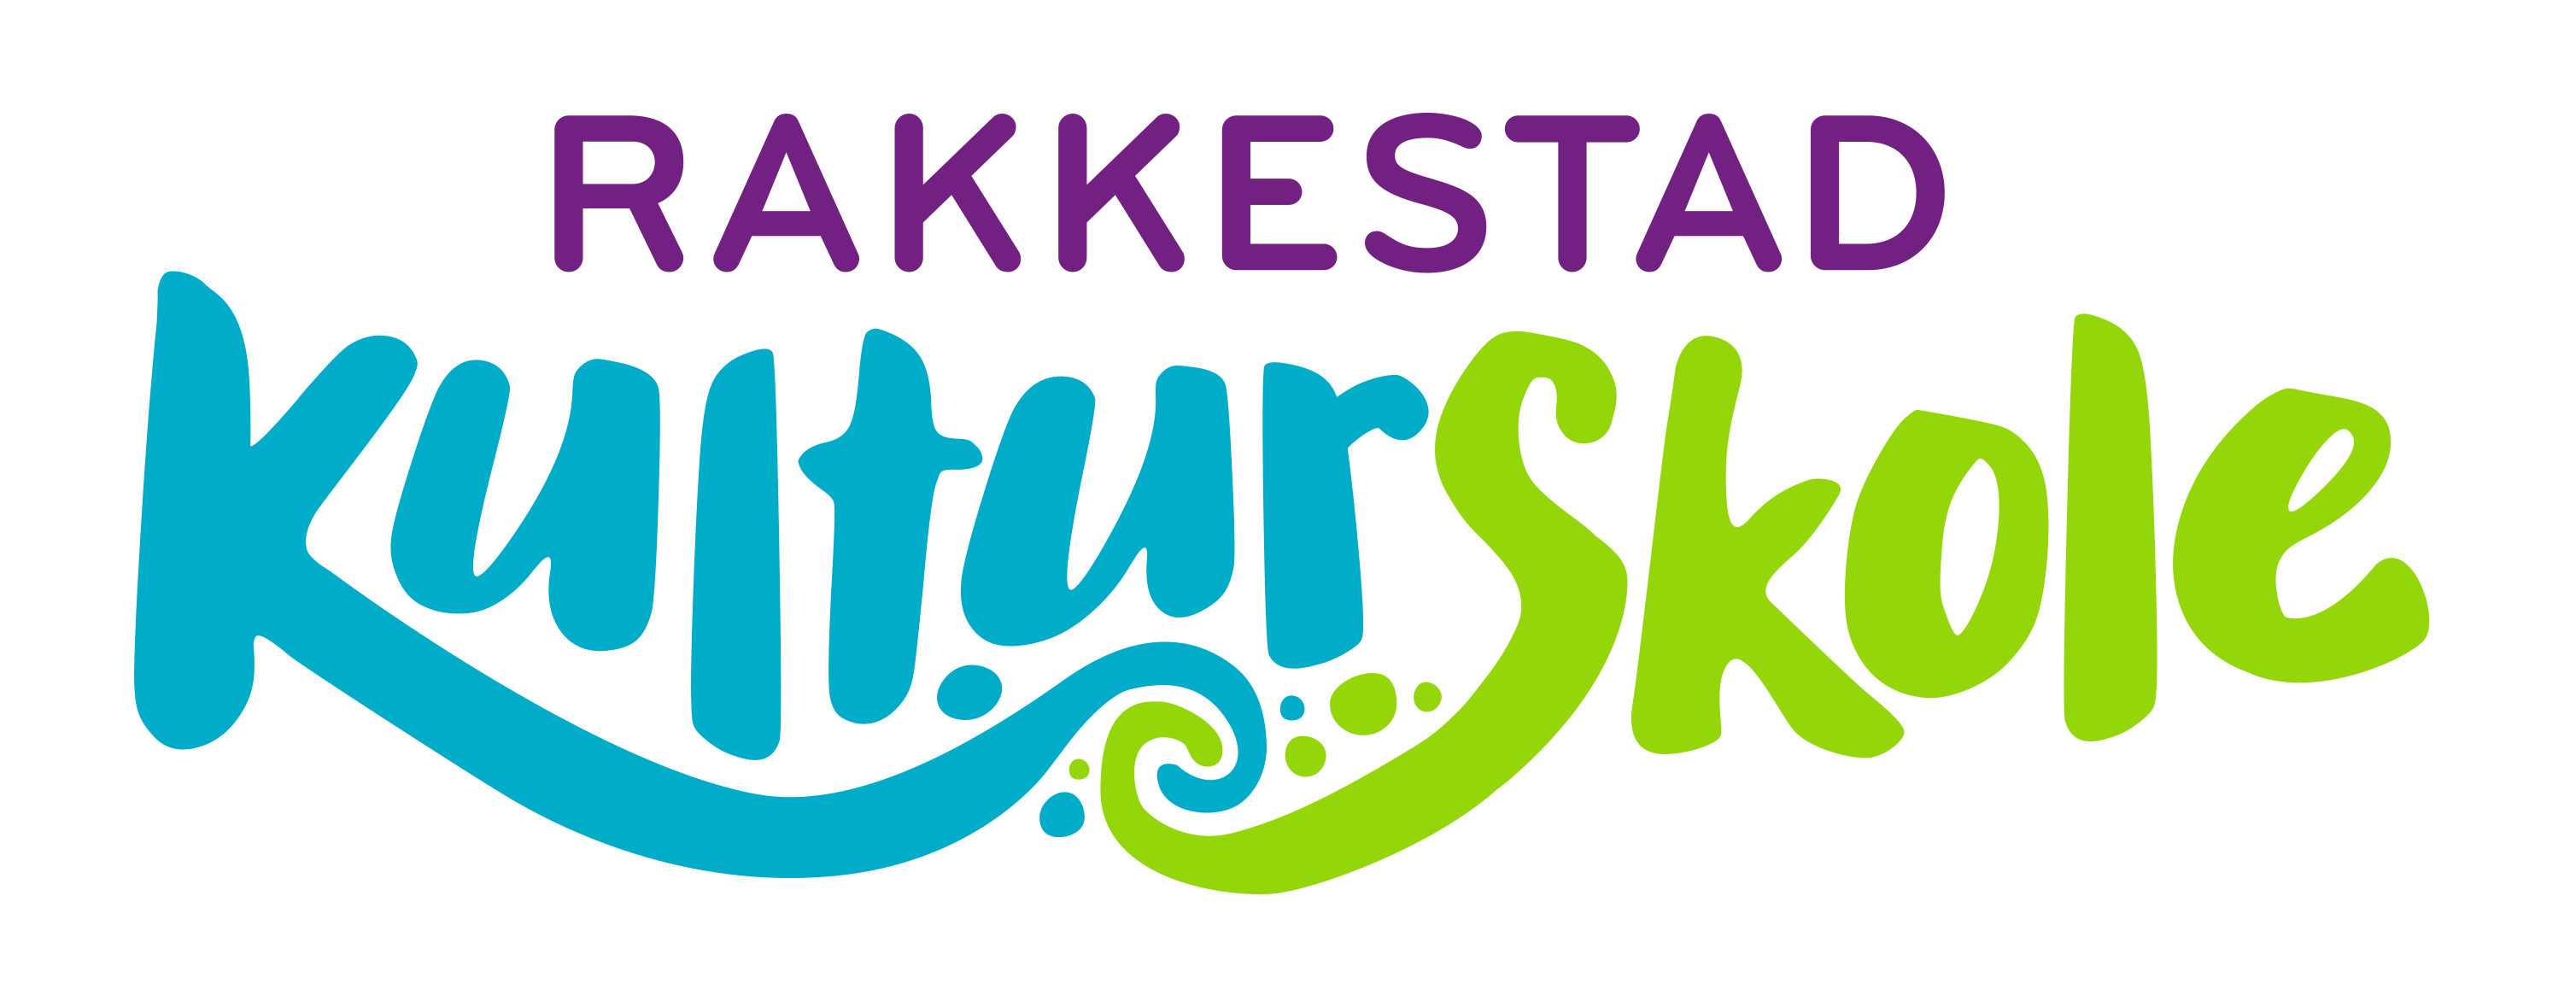 Rakkestad Kulturskole Logo